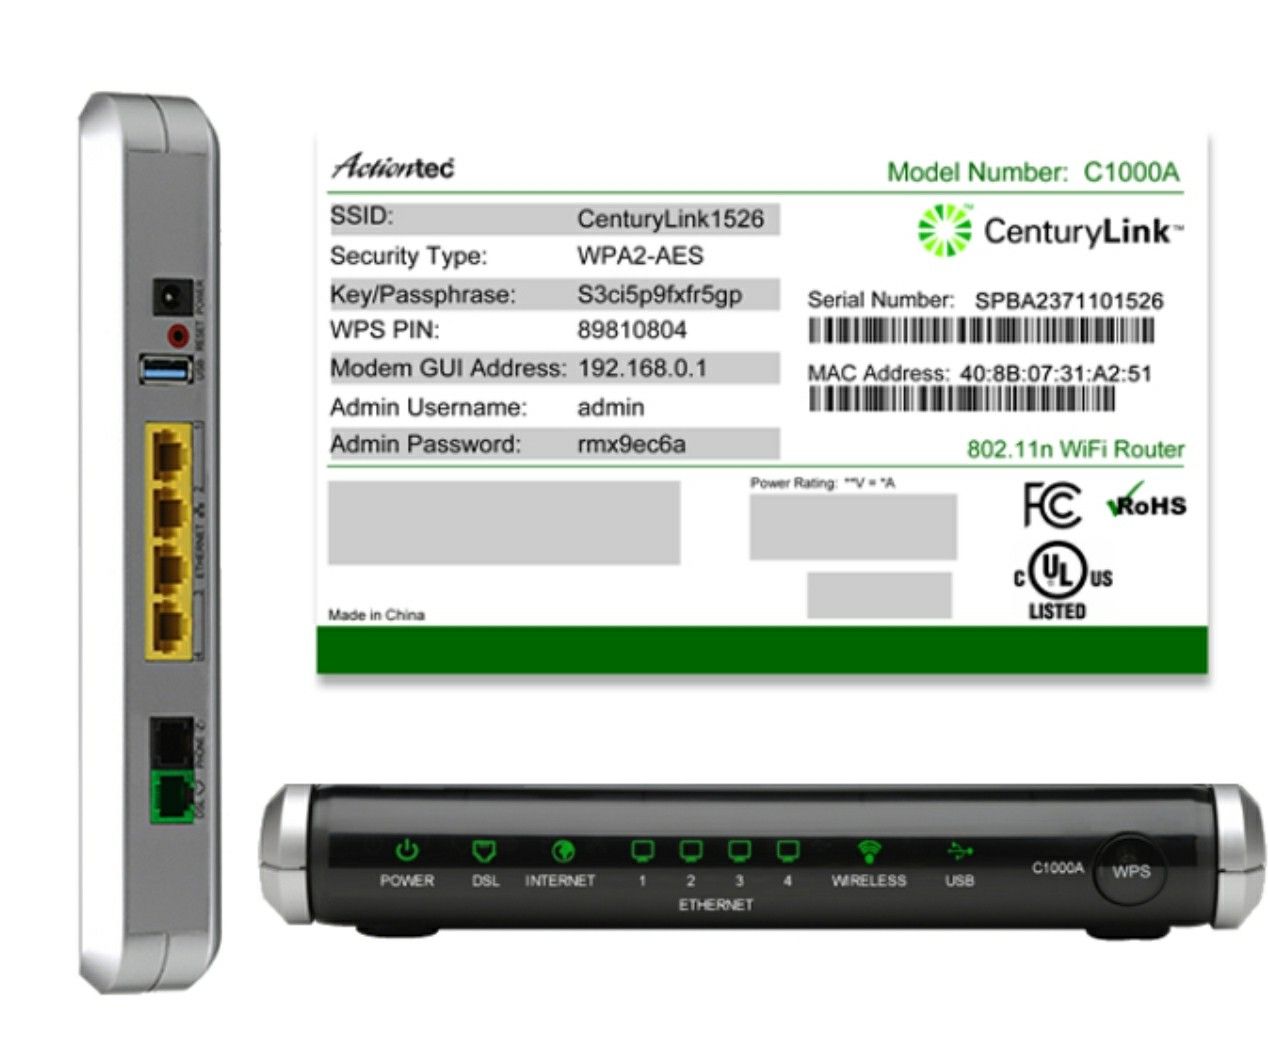 CenturyLink C1000A modem/WiFi router